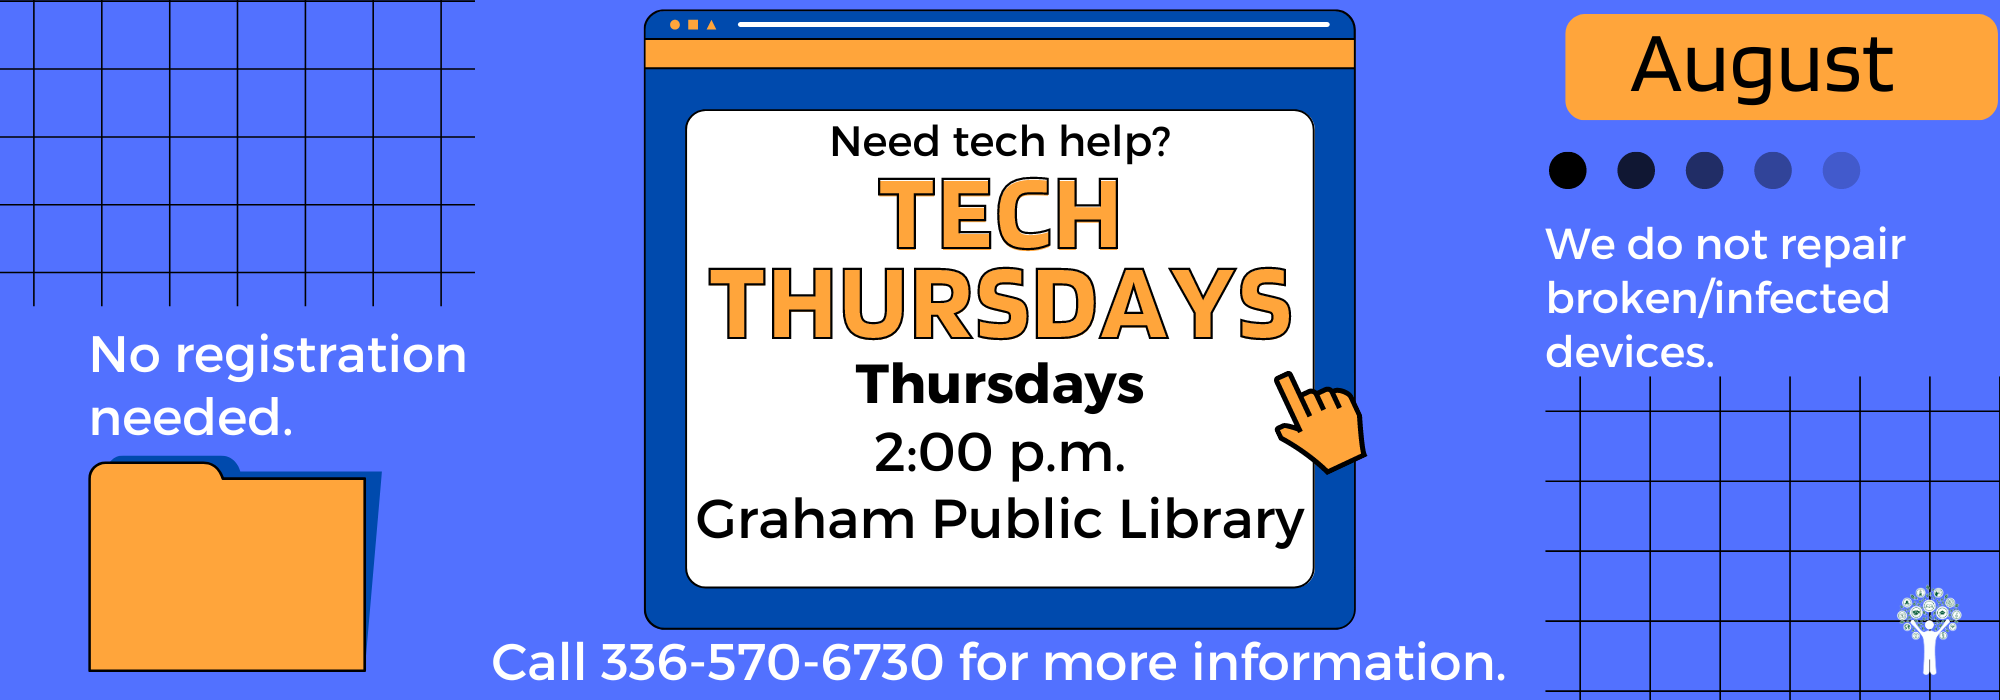 Tech Thursdays at 2 pm at Graham